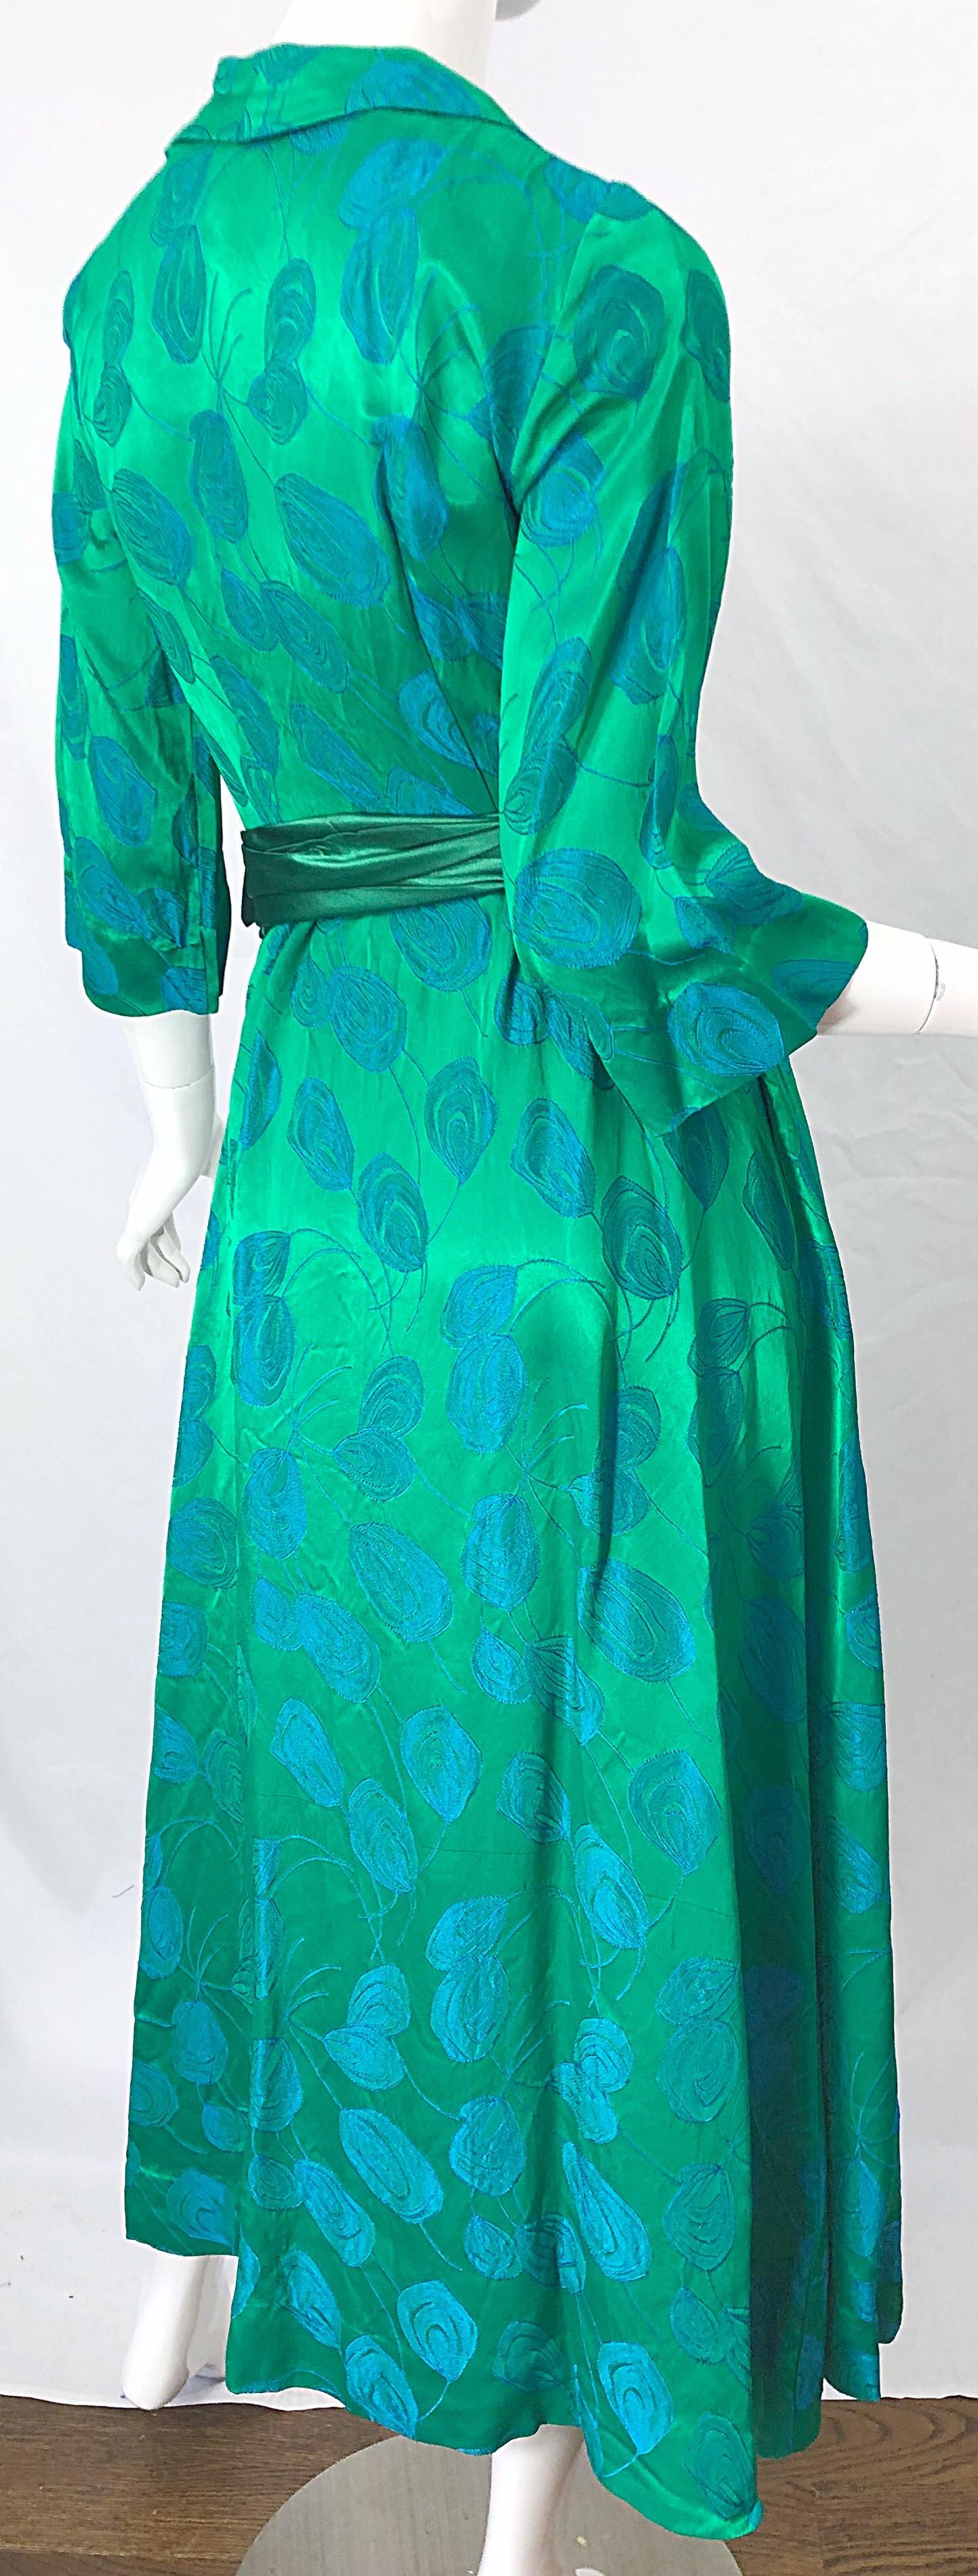 1950s Kelly Green + Blue Flower Print Rayon Rhinestone Vintage 50s Wrap Dress For Sale 3